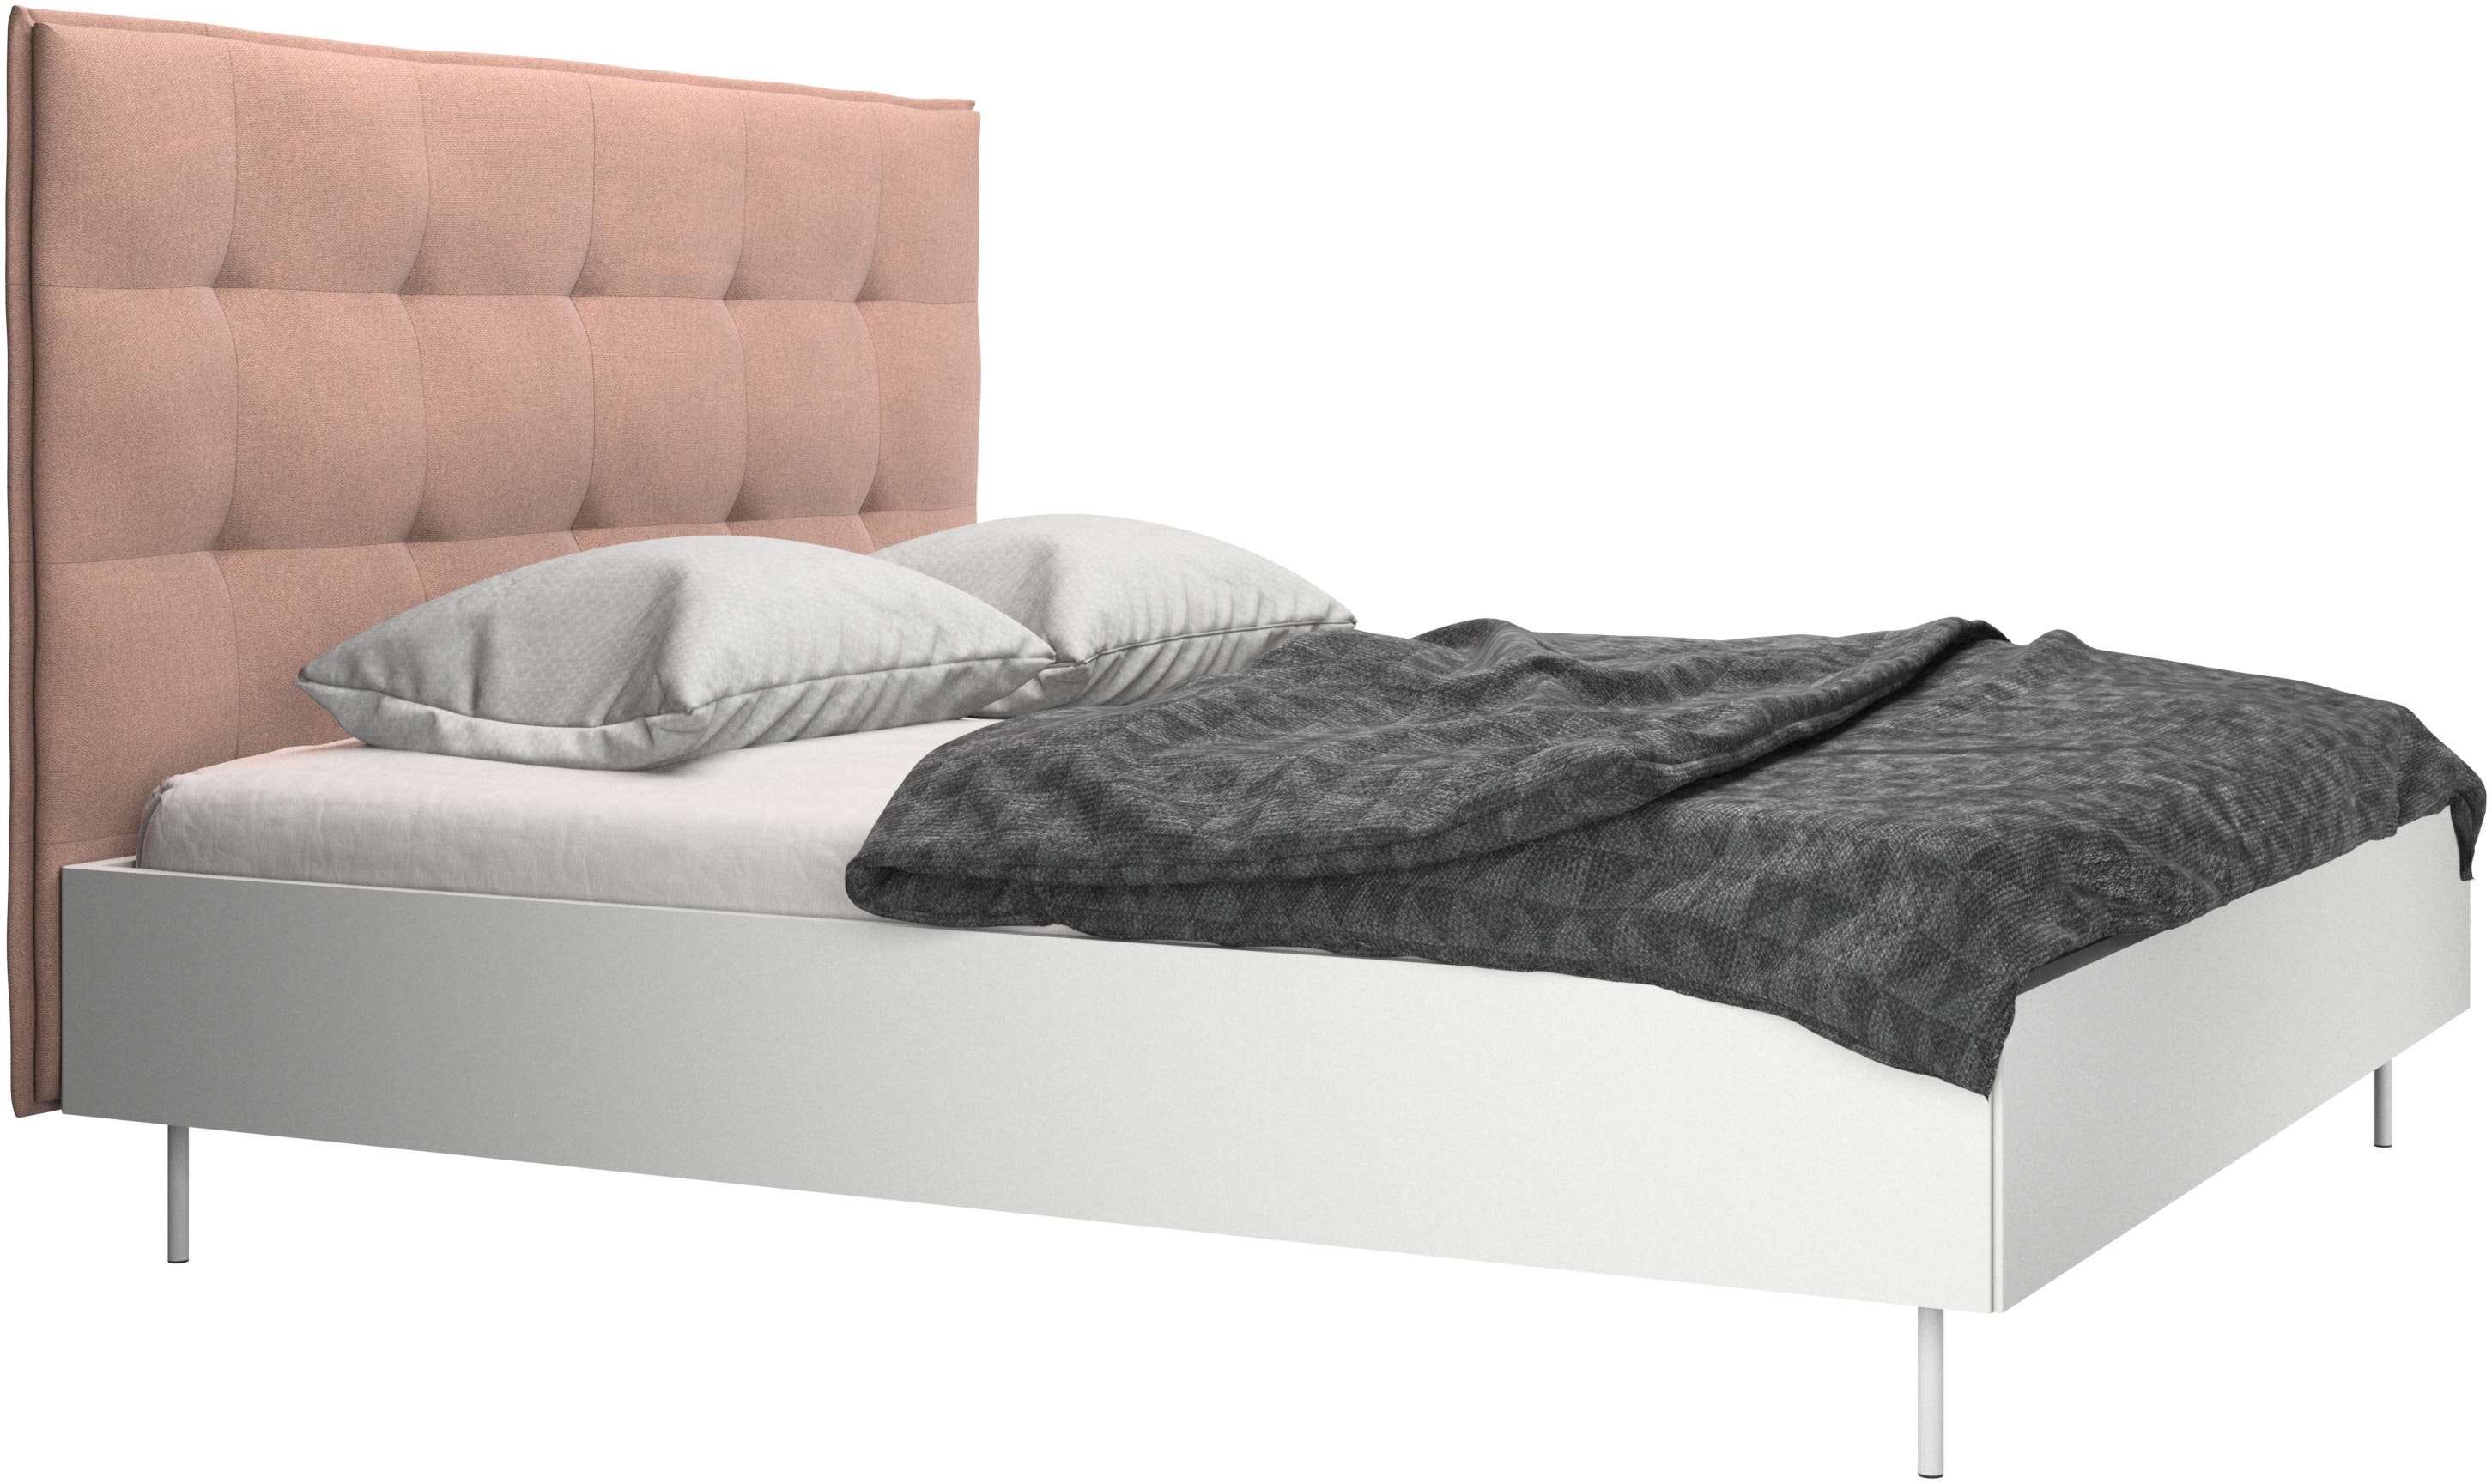 Lugano bed, excl. slats and mattress